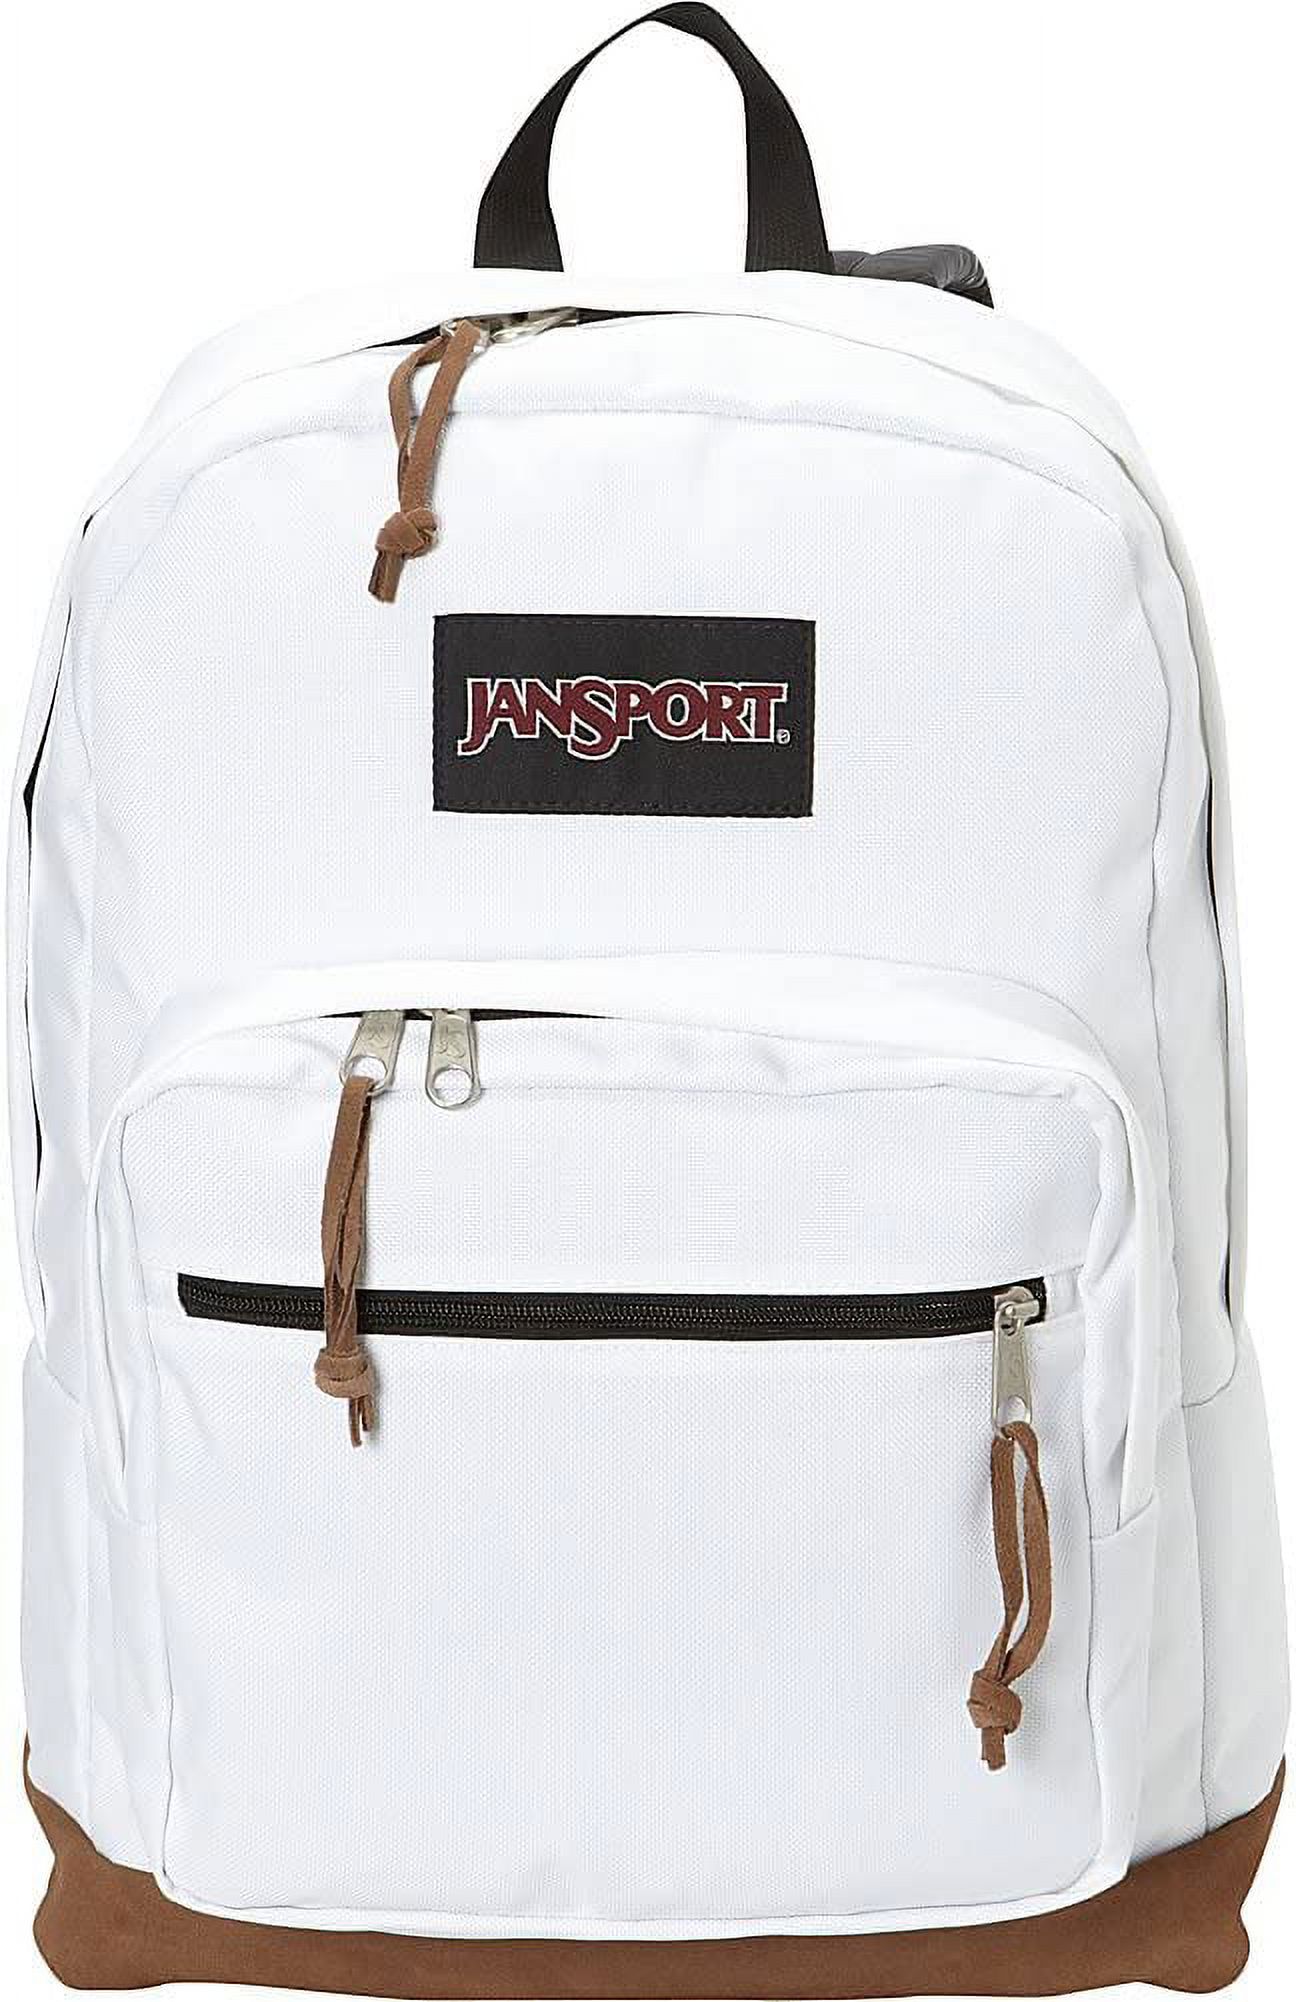 JanSport Right Pack Laptop Backpack- Sale Colors (Silver Rose Jacquard) - image 3 of 7